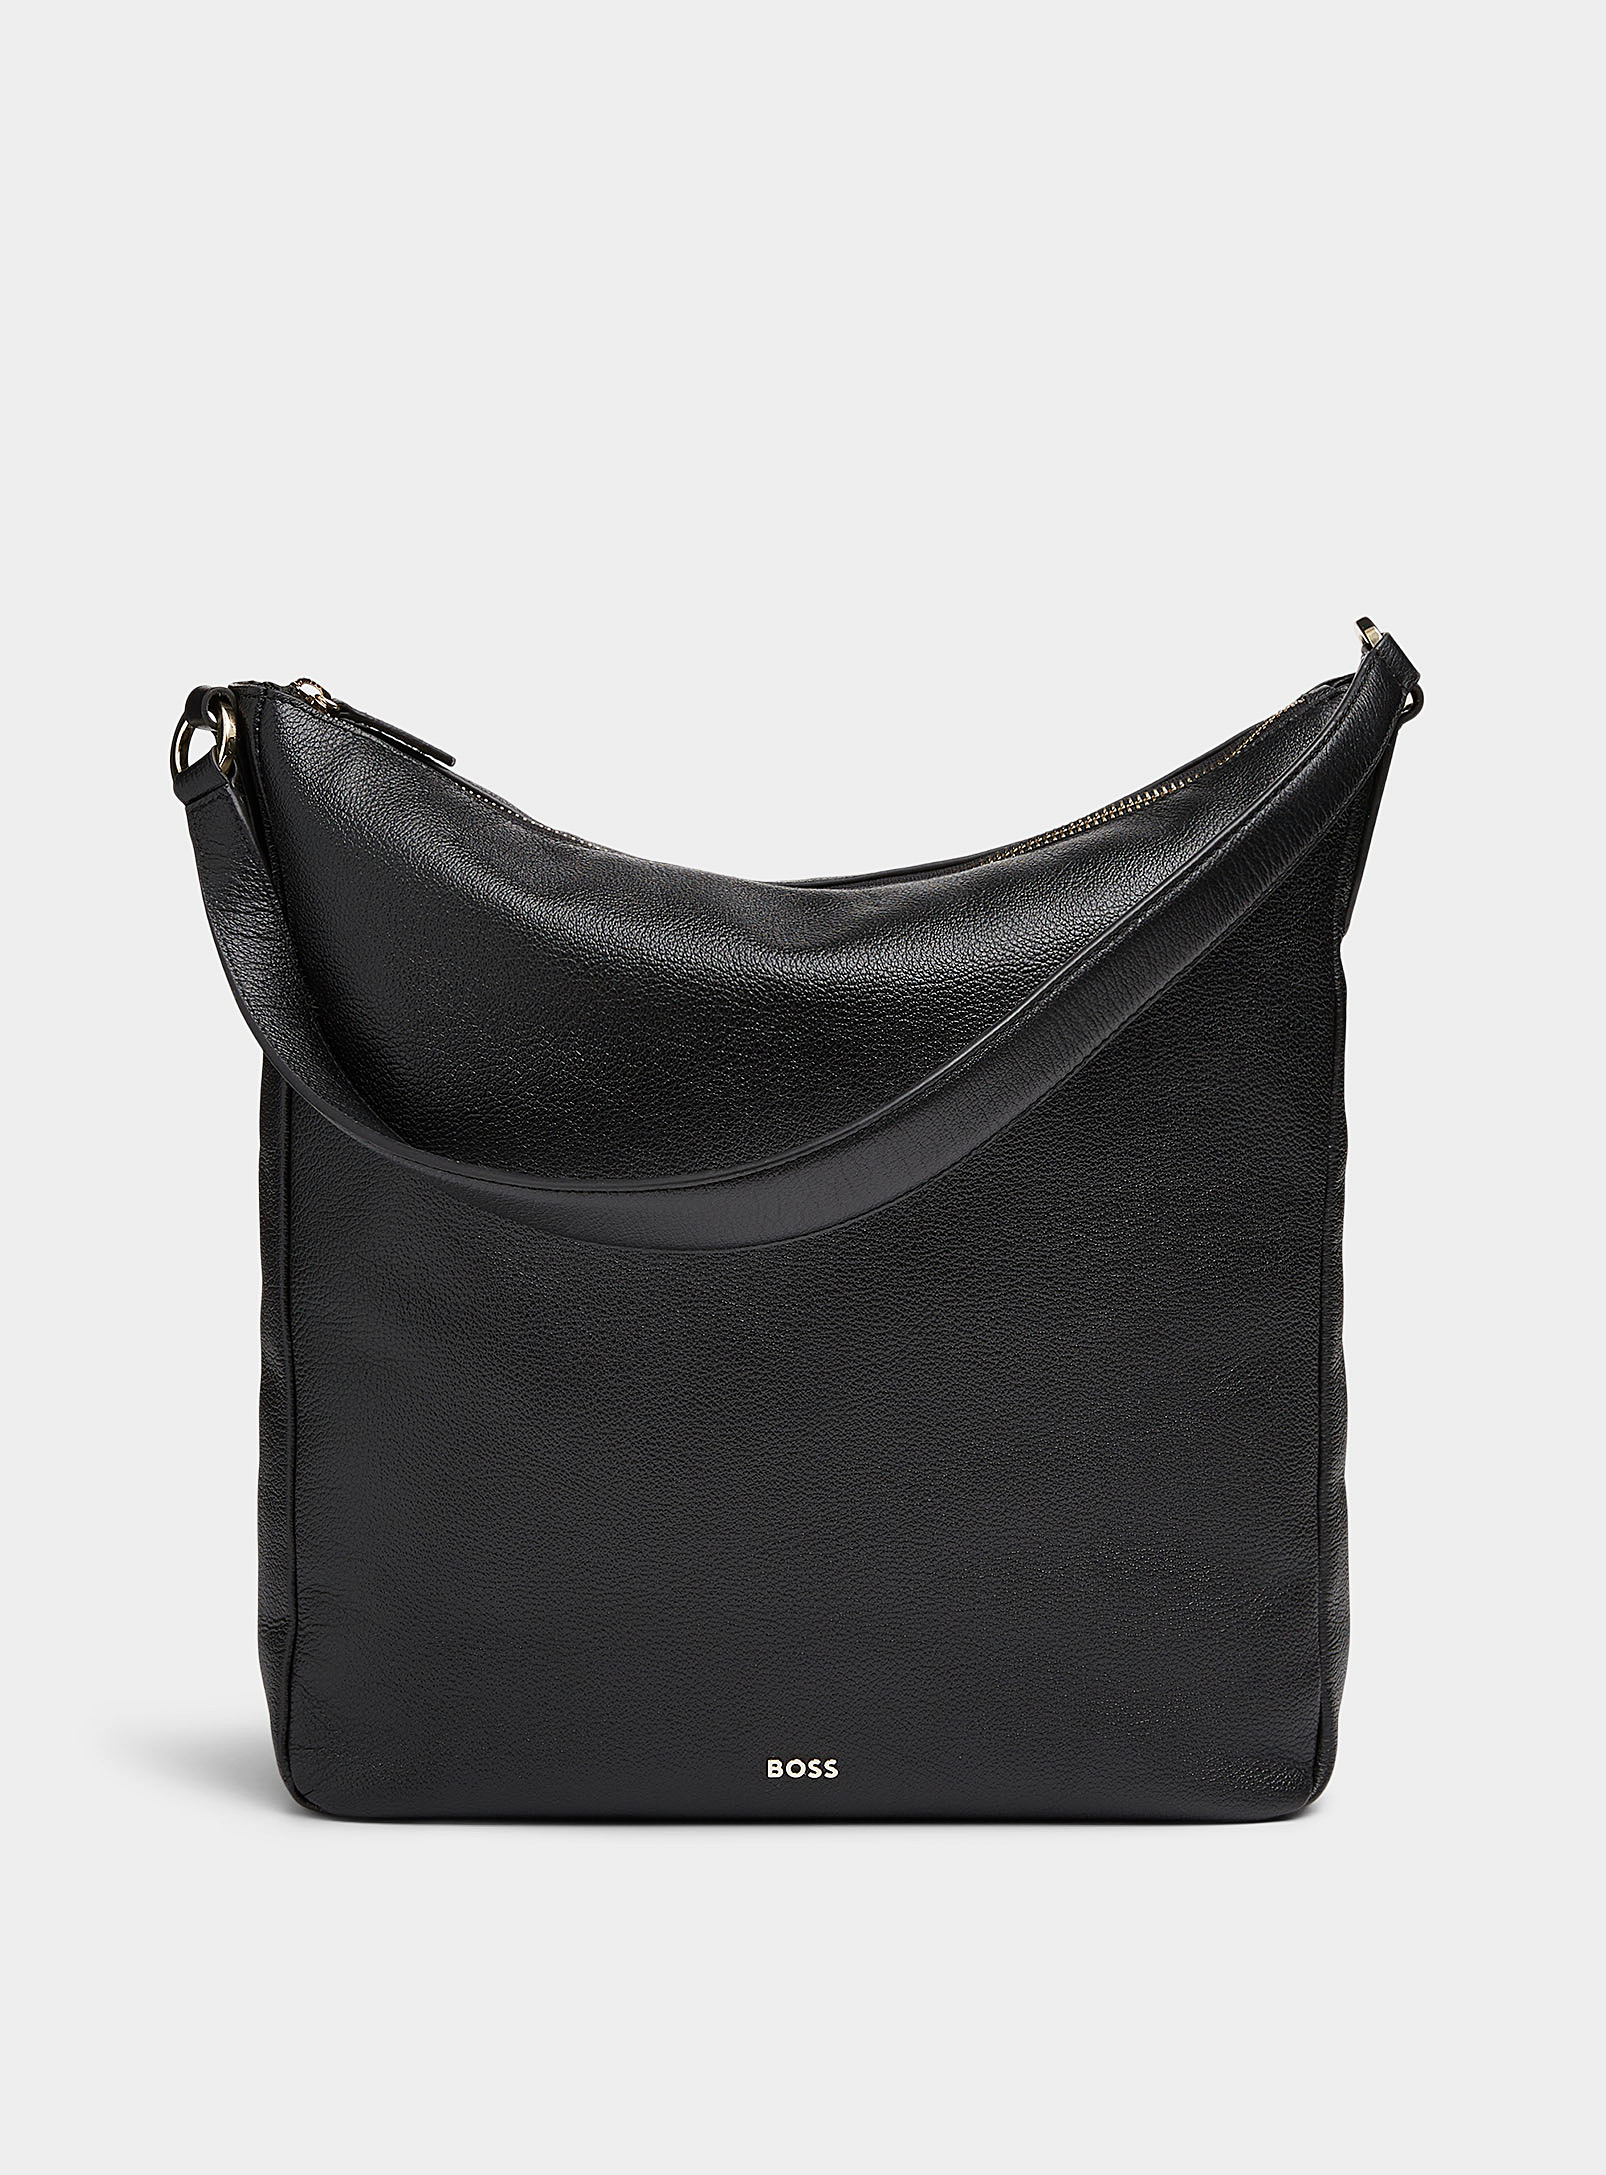 Hugo Boss Alyce Pebbled Leather Square Saddle Bag In Black